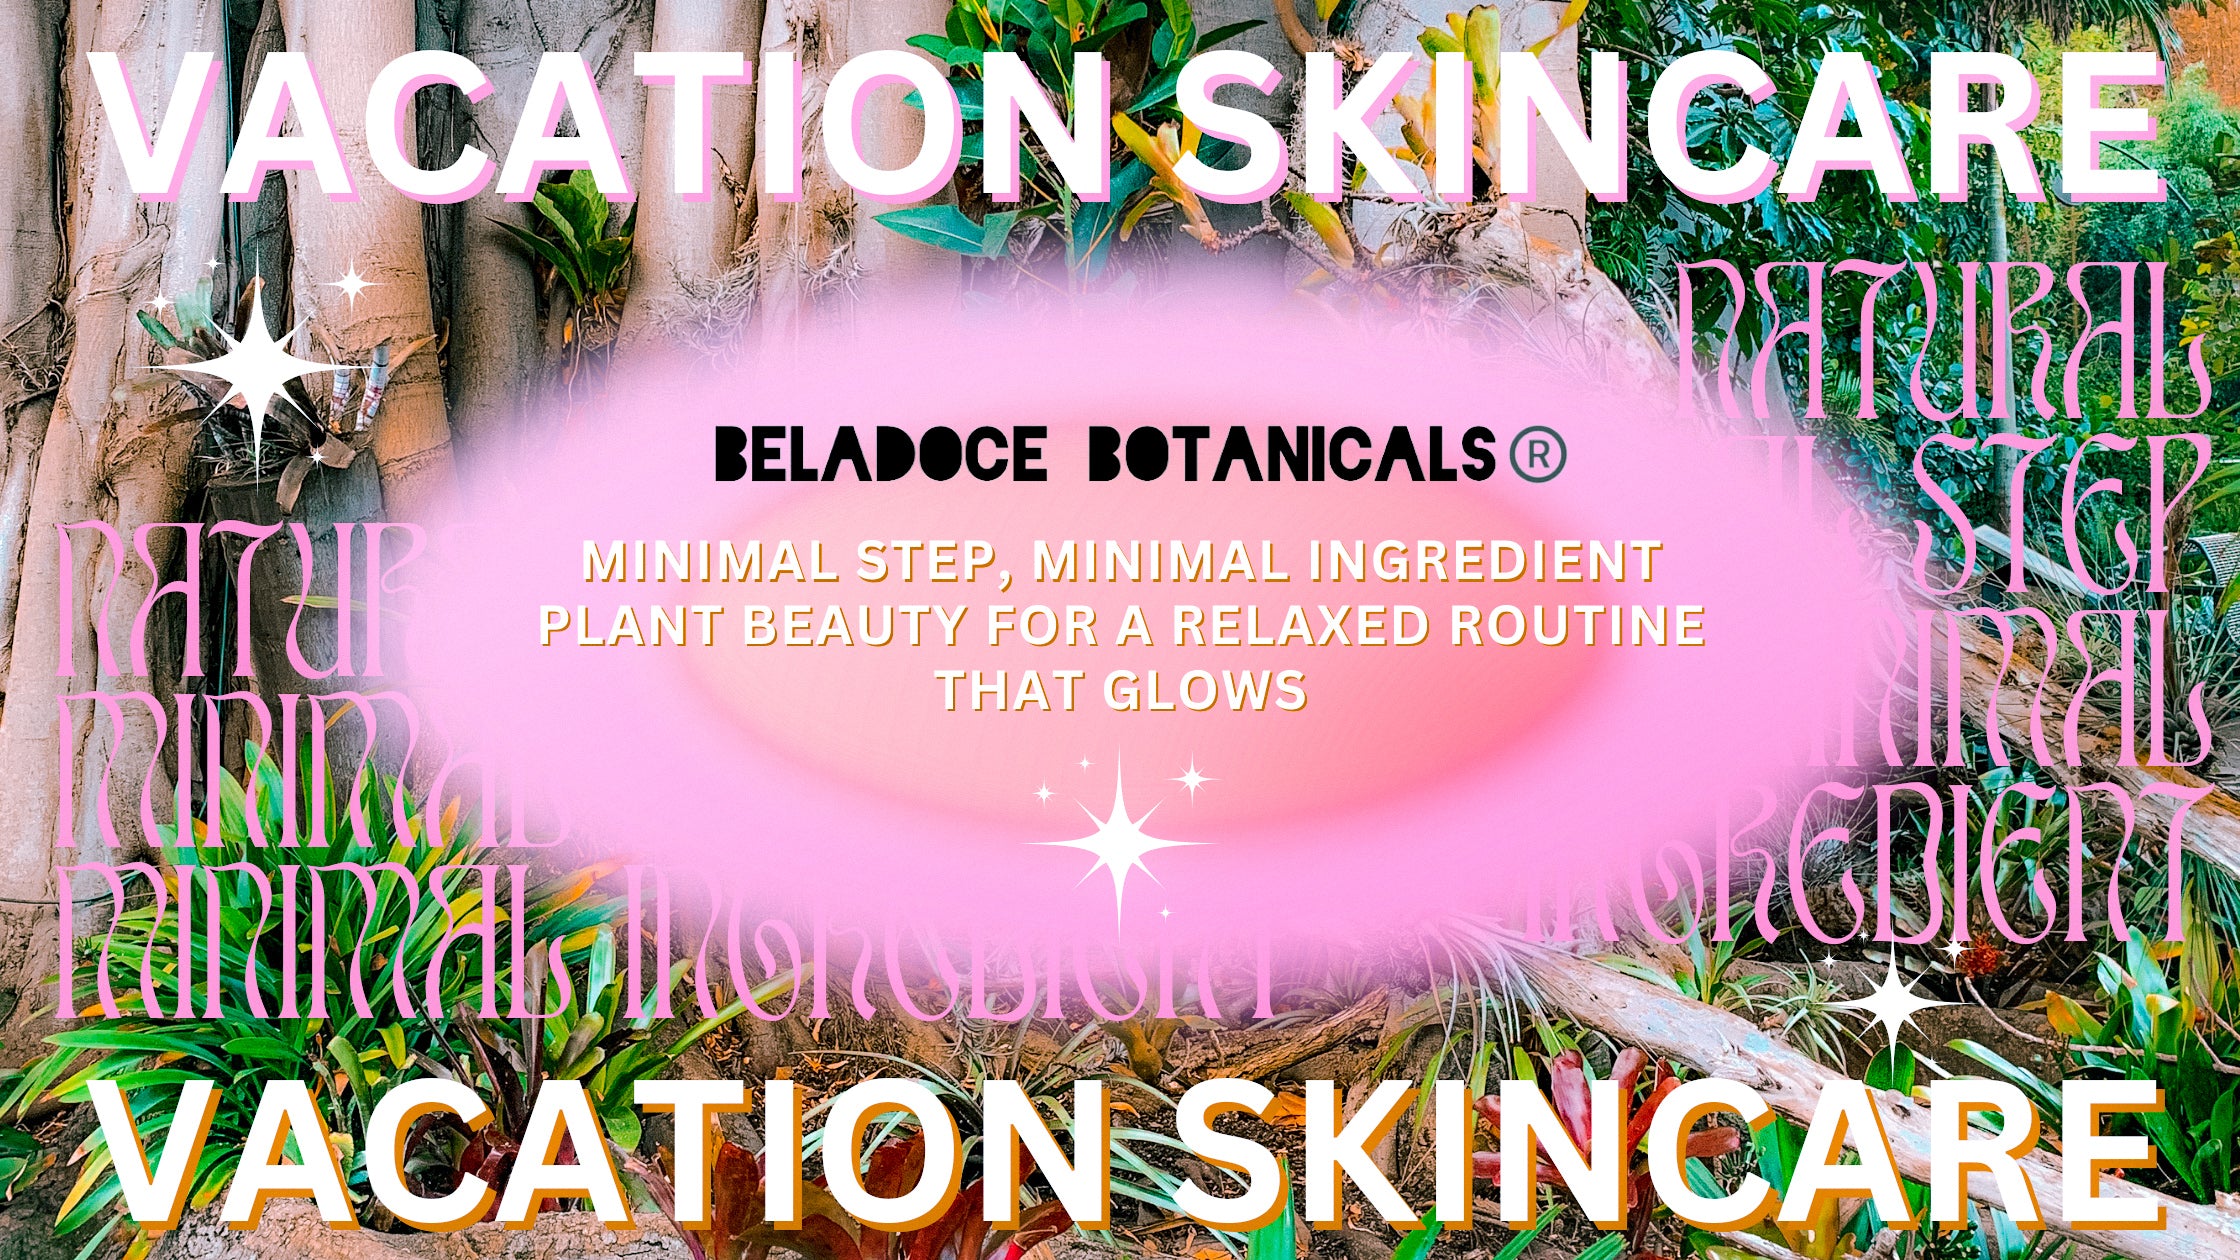 Beladoce botanicals Vacation Skincare